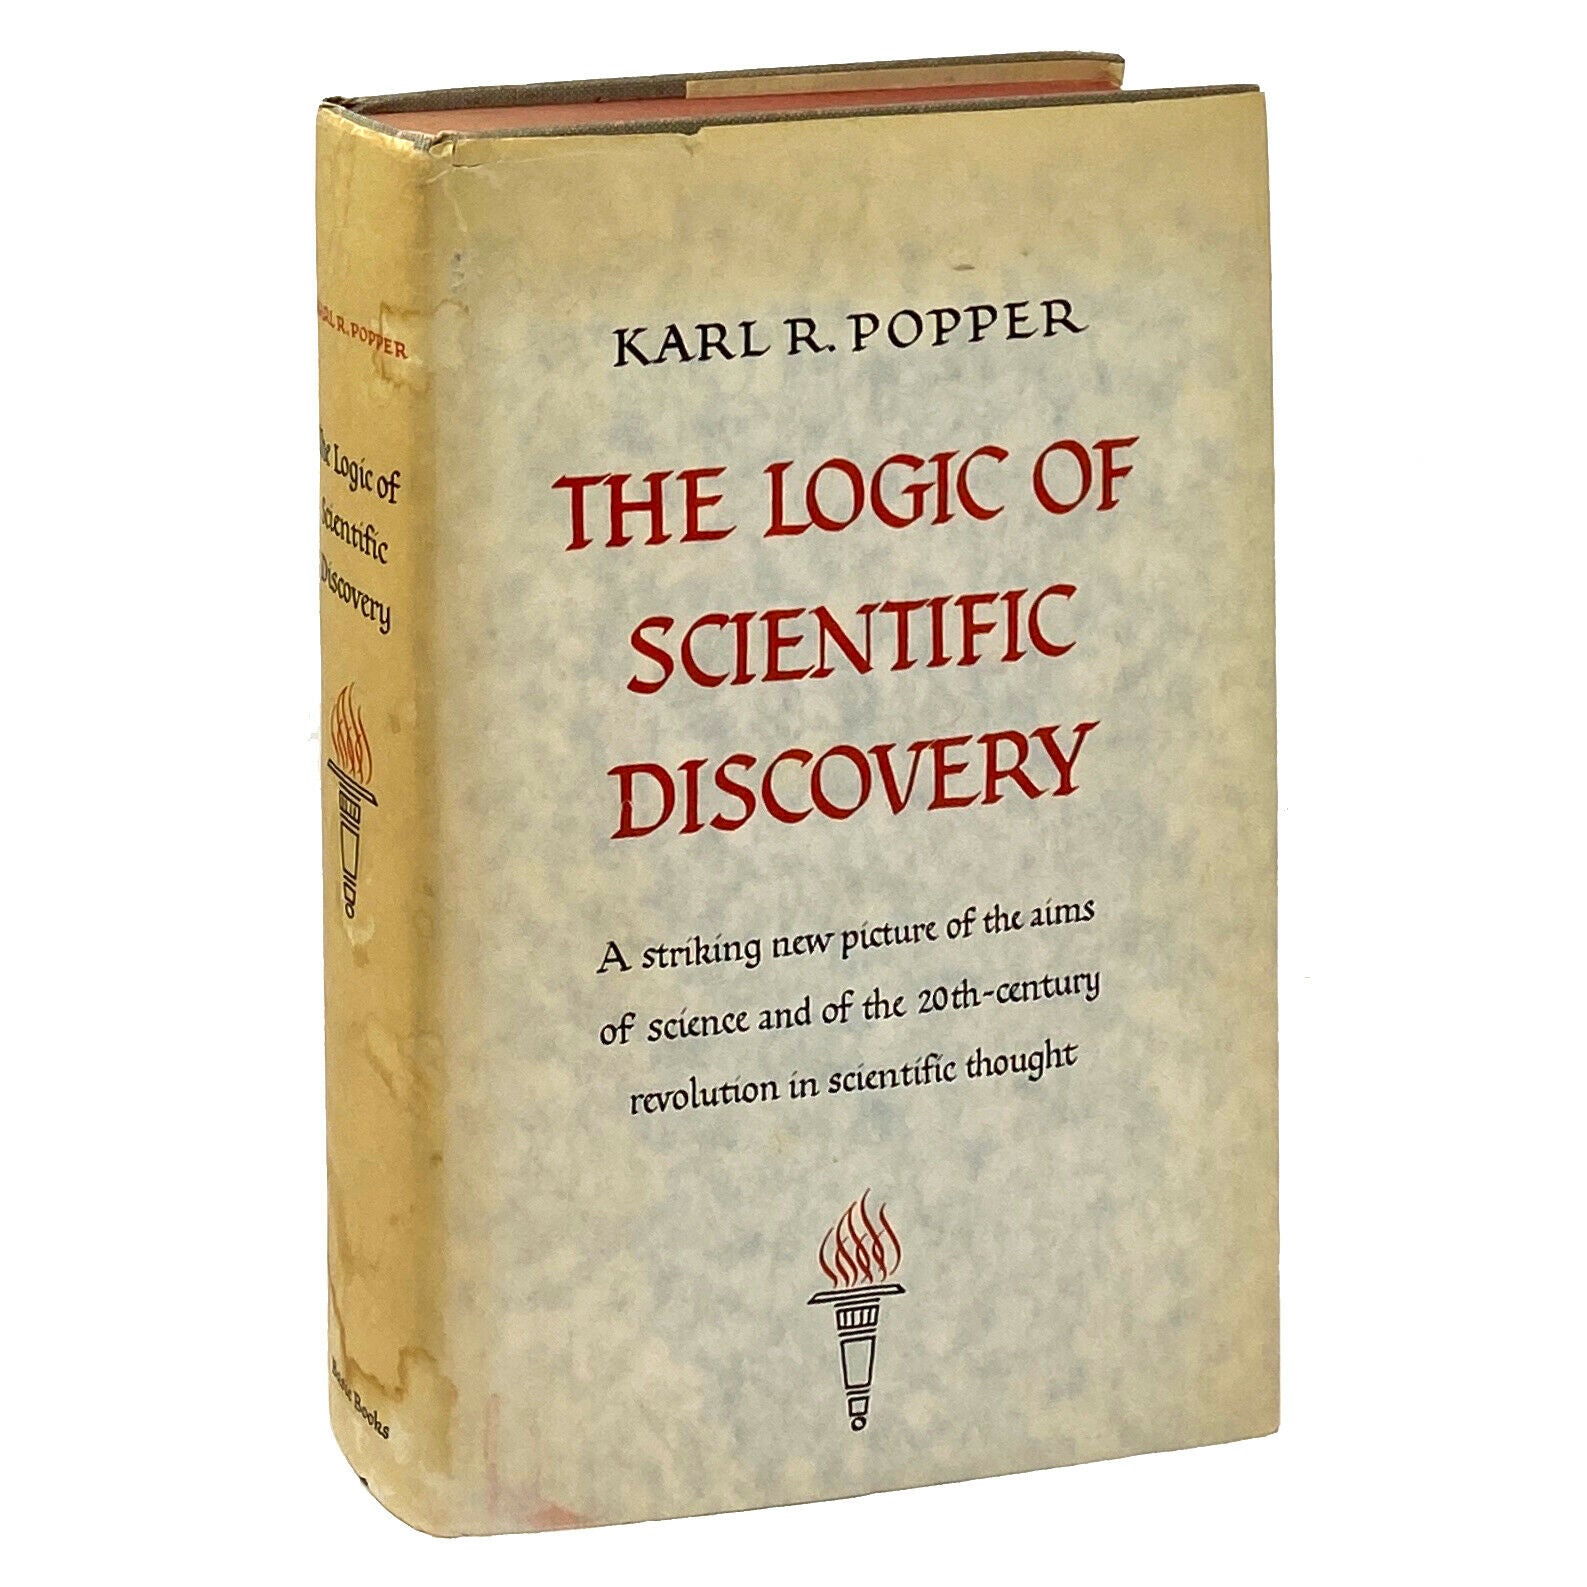 frekvens skrive et brev Flytte The Logic of Scientific Discovery, Karl Popper – The Rare Book Sleuth